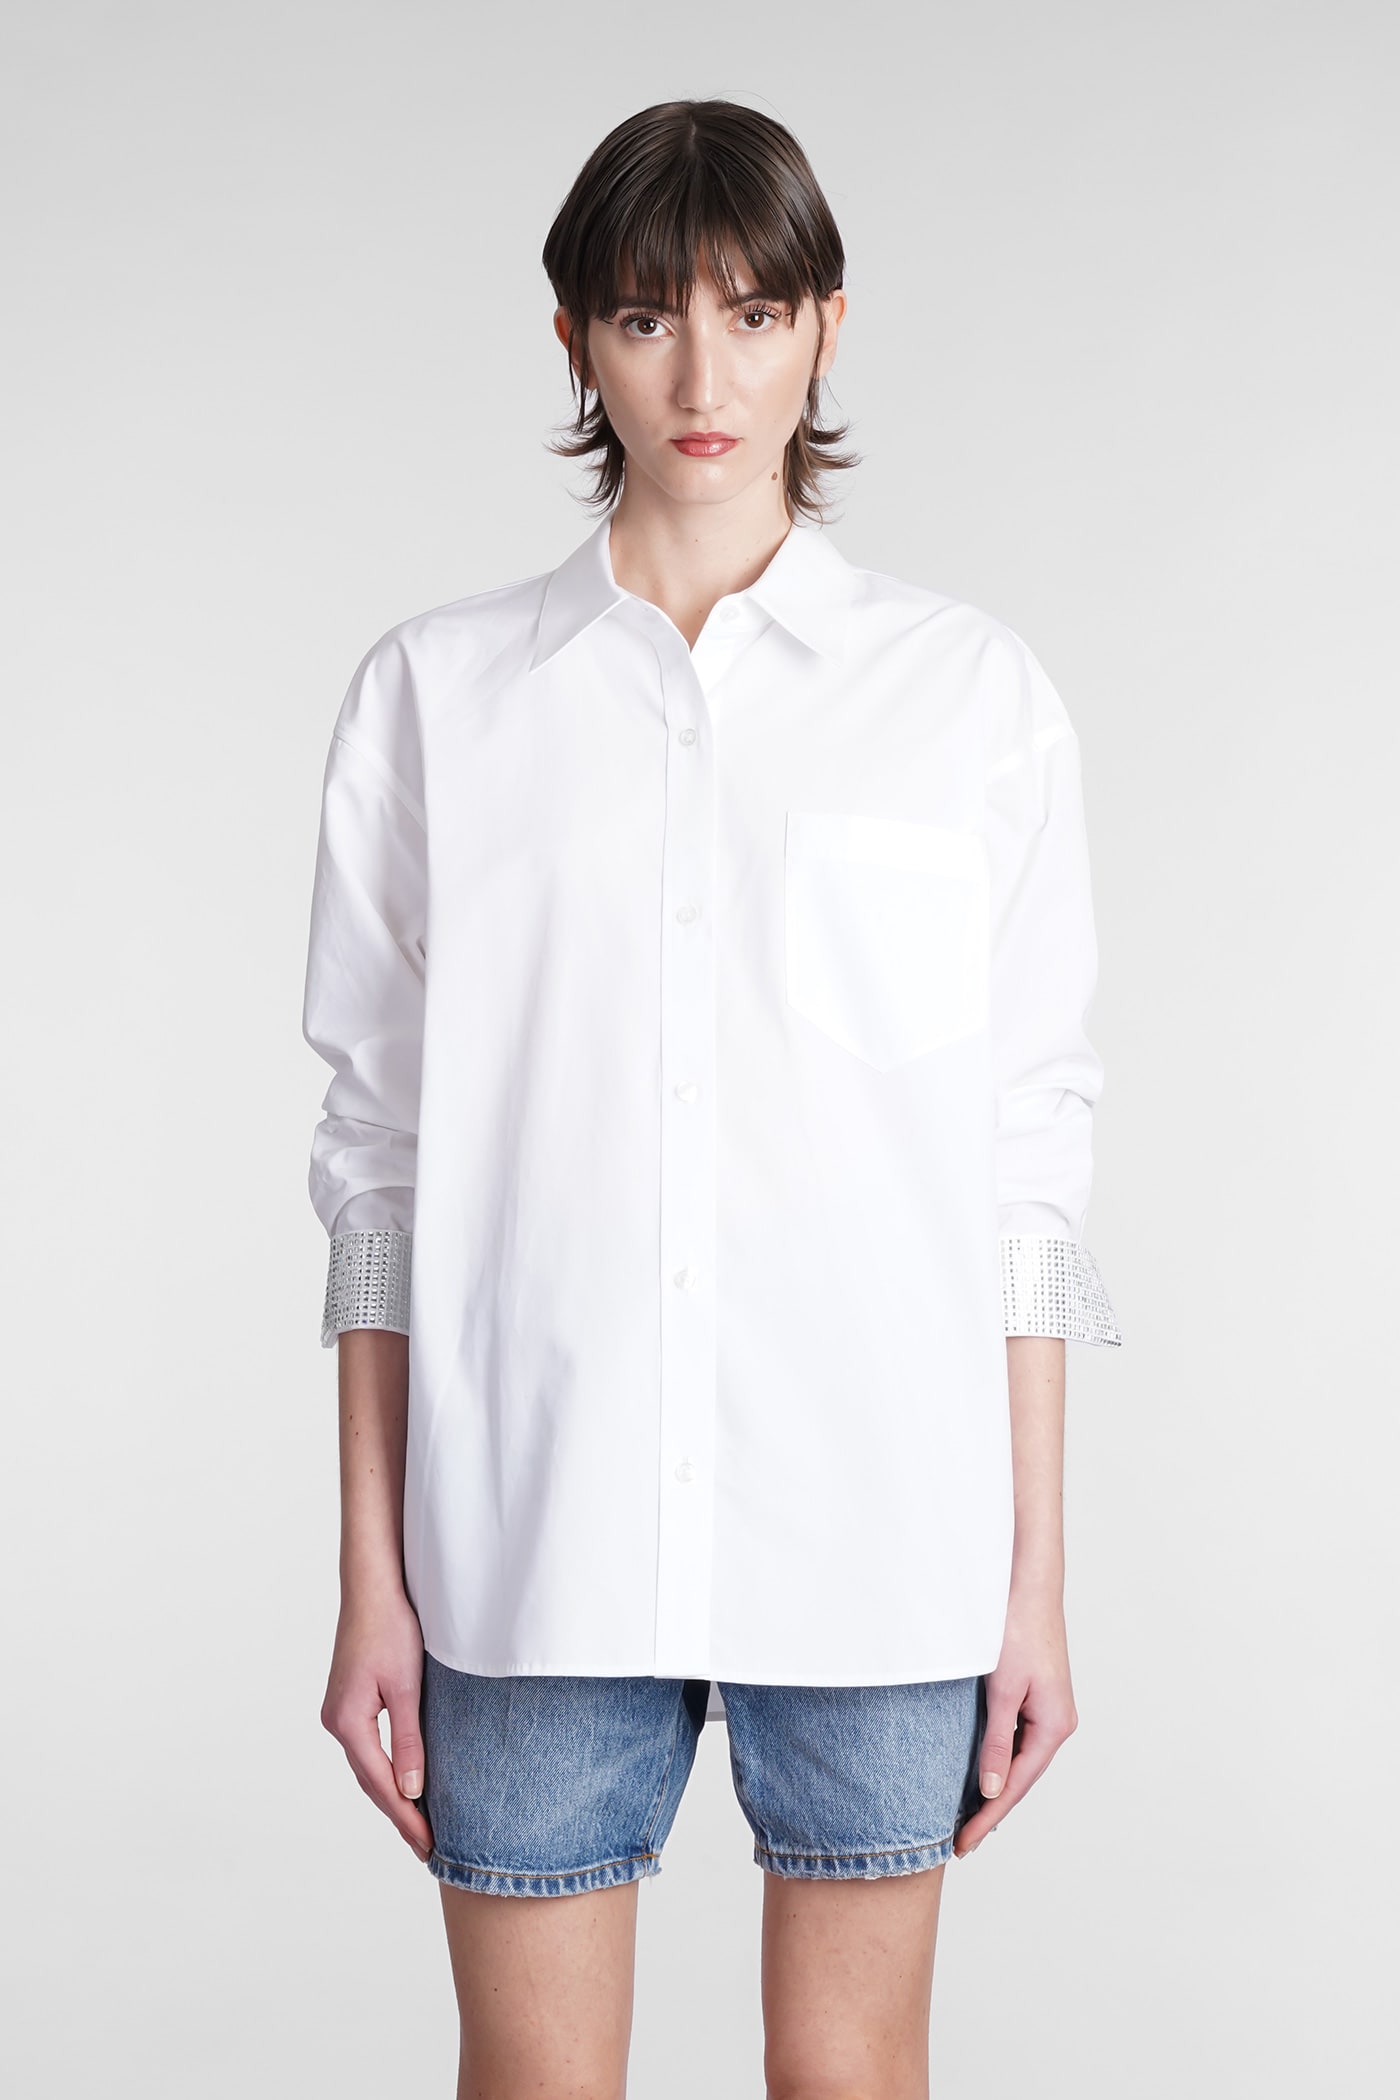 Alexander Wang Shirt In White Cotton